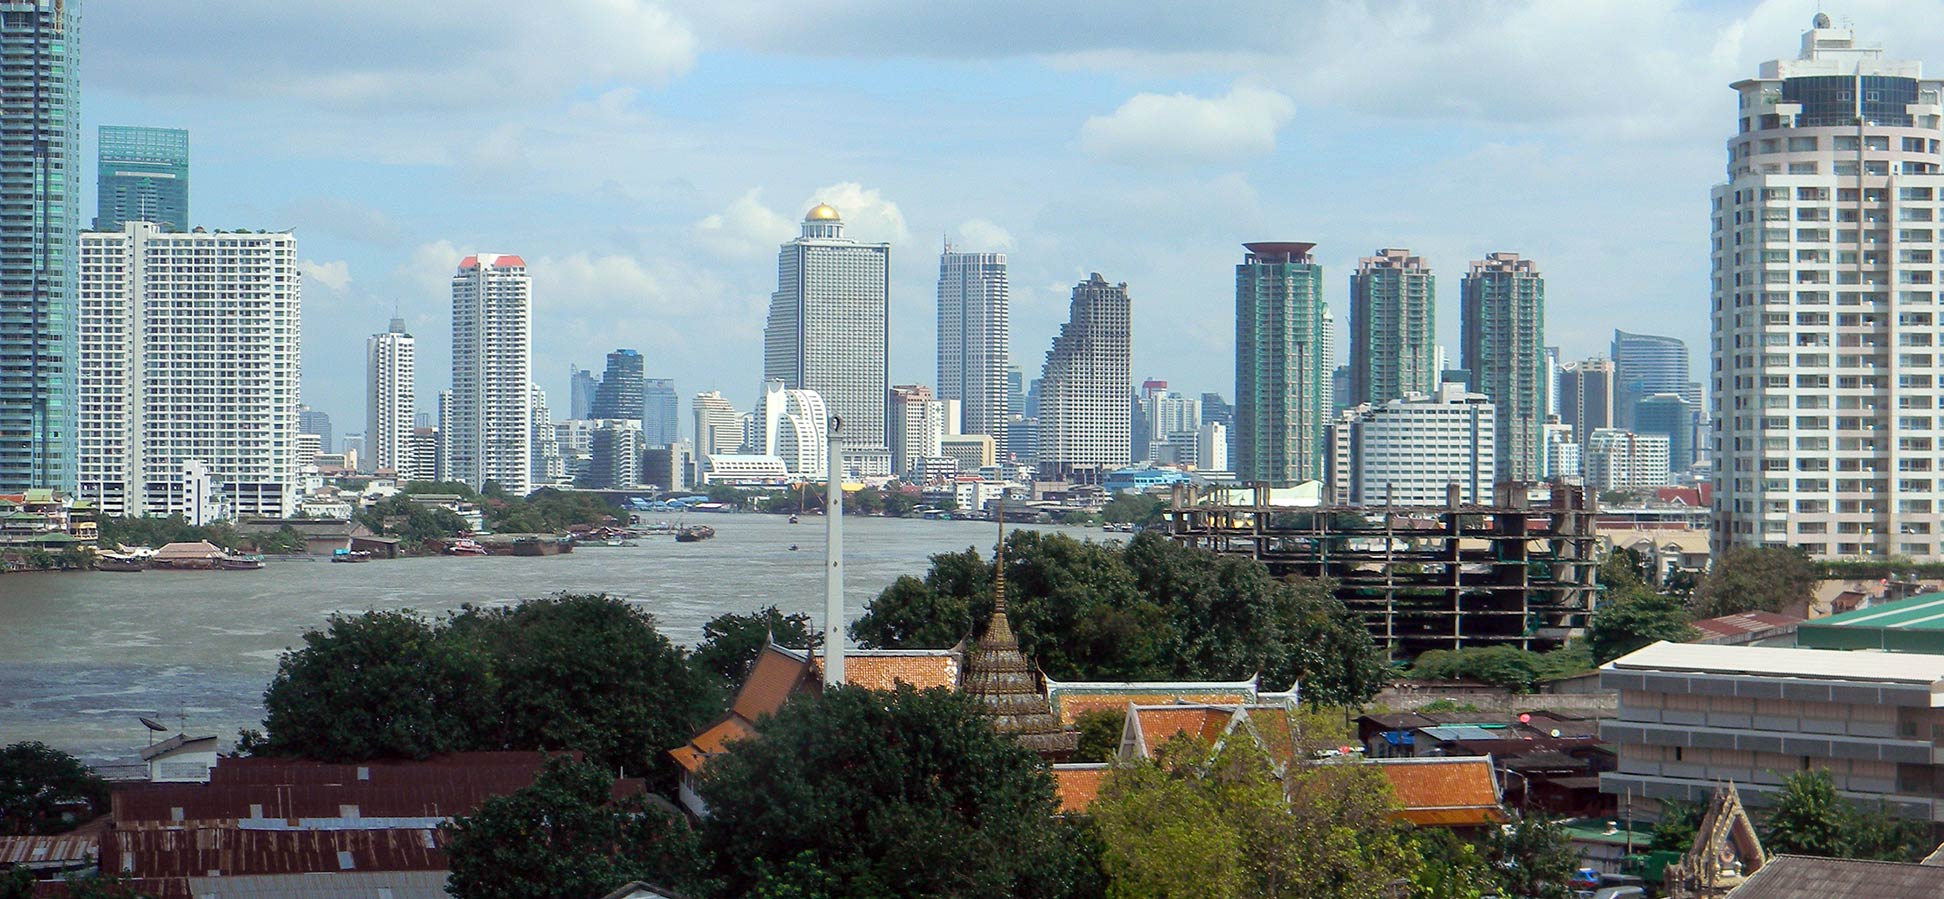 Bangkok, the capital of Thailand on the Chao Phraya River